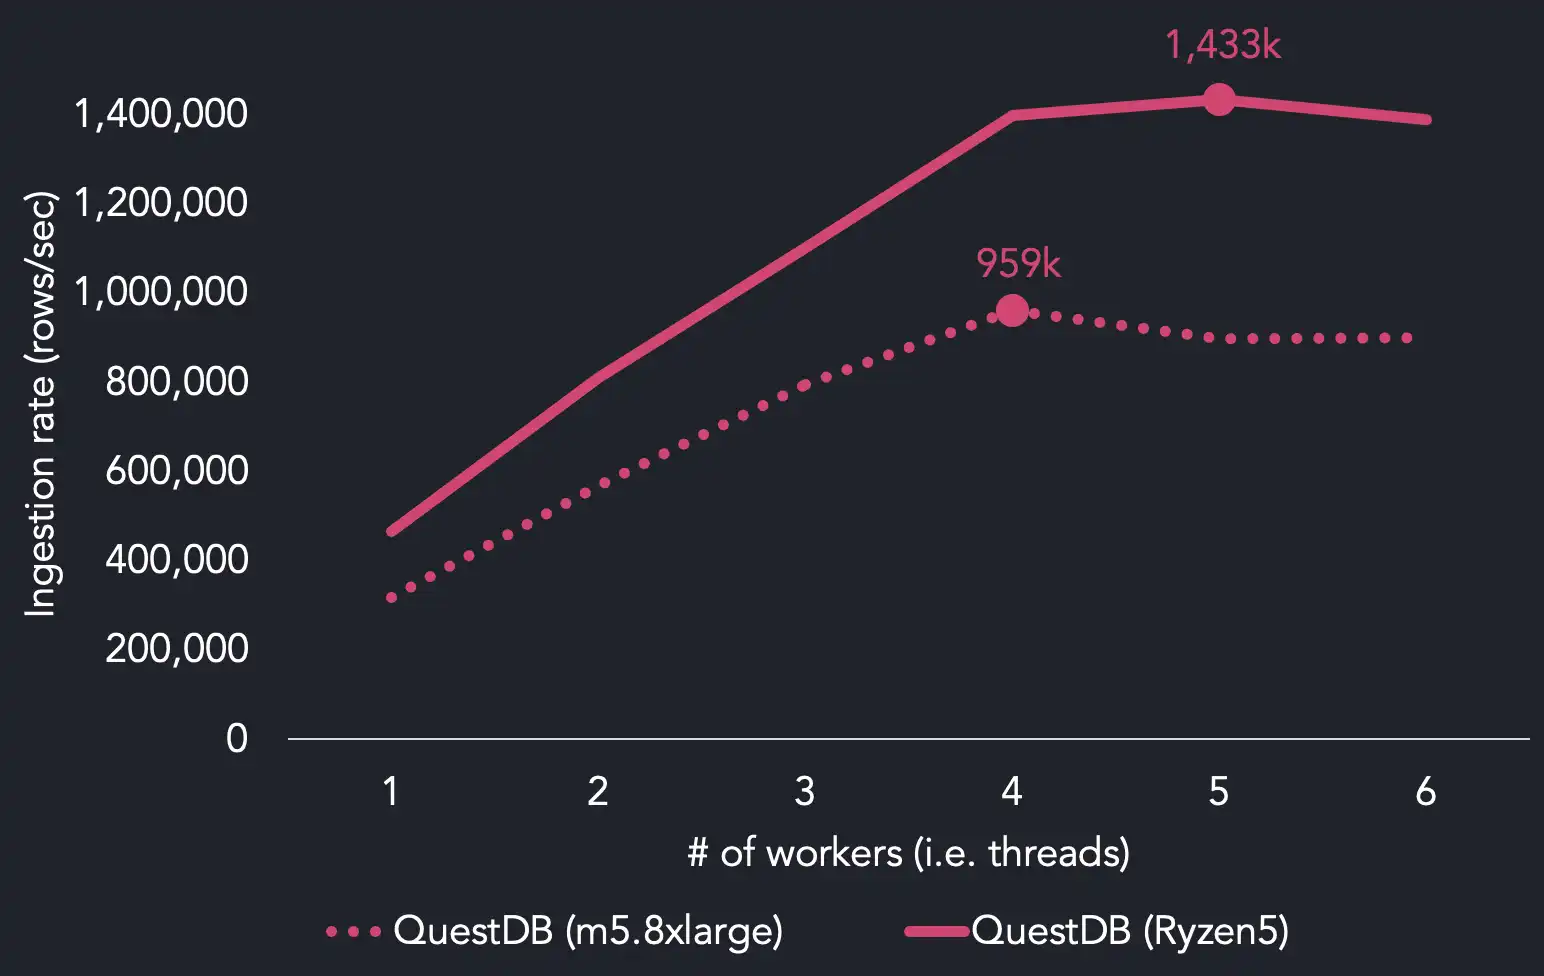 A chart comparing the maximum throughput of QuestDB when utilizing an Intel Xeon Platinum processor versus an AMD Ryzen5 processor.